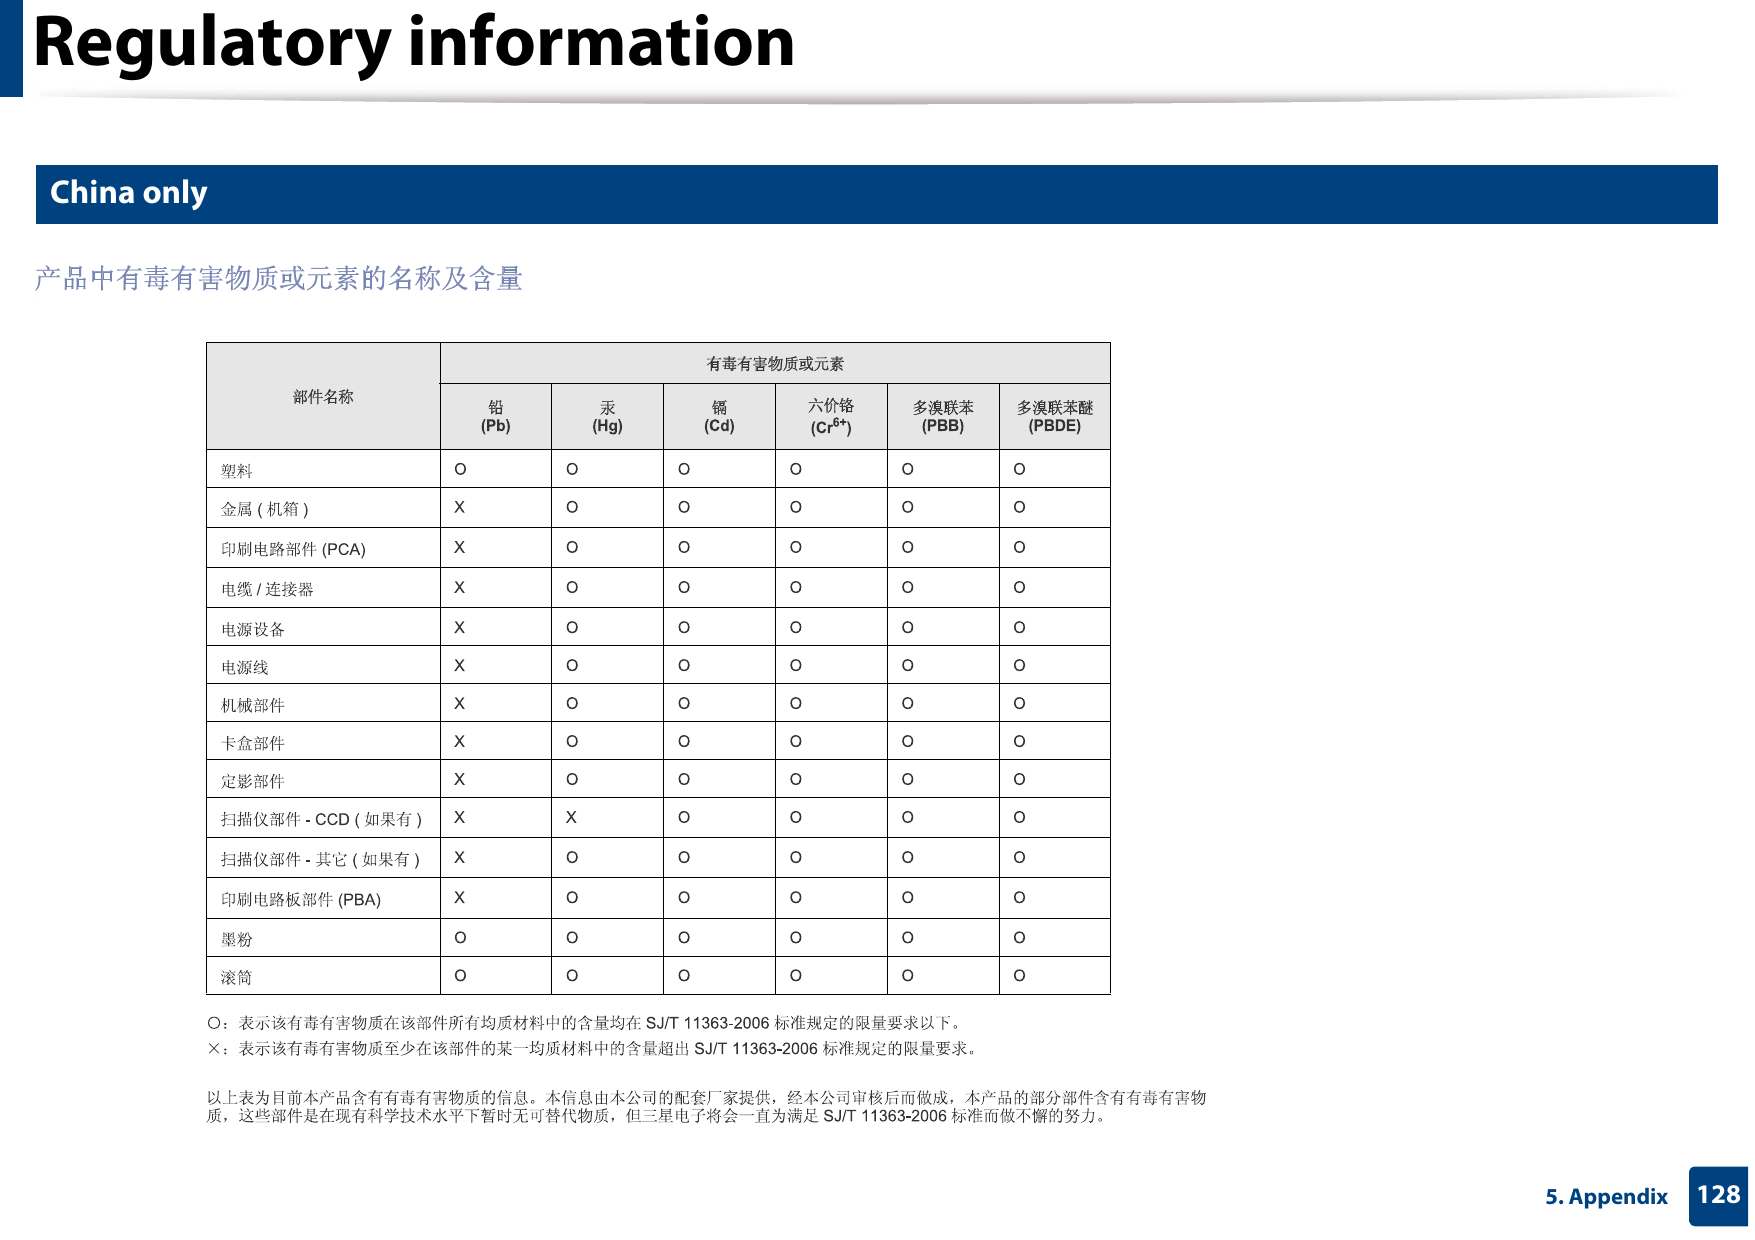 Regulatory information1285. Appendix22 China only